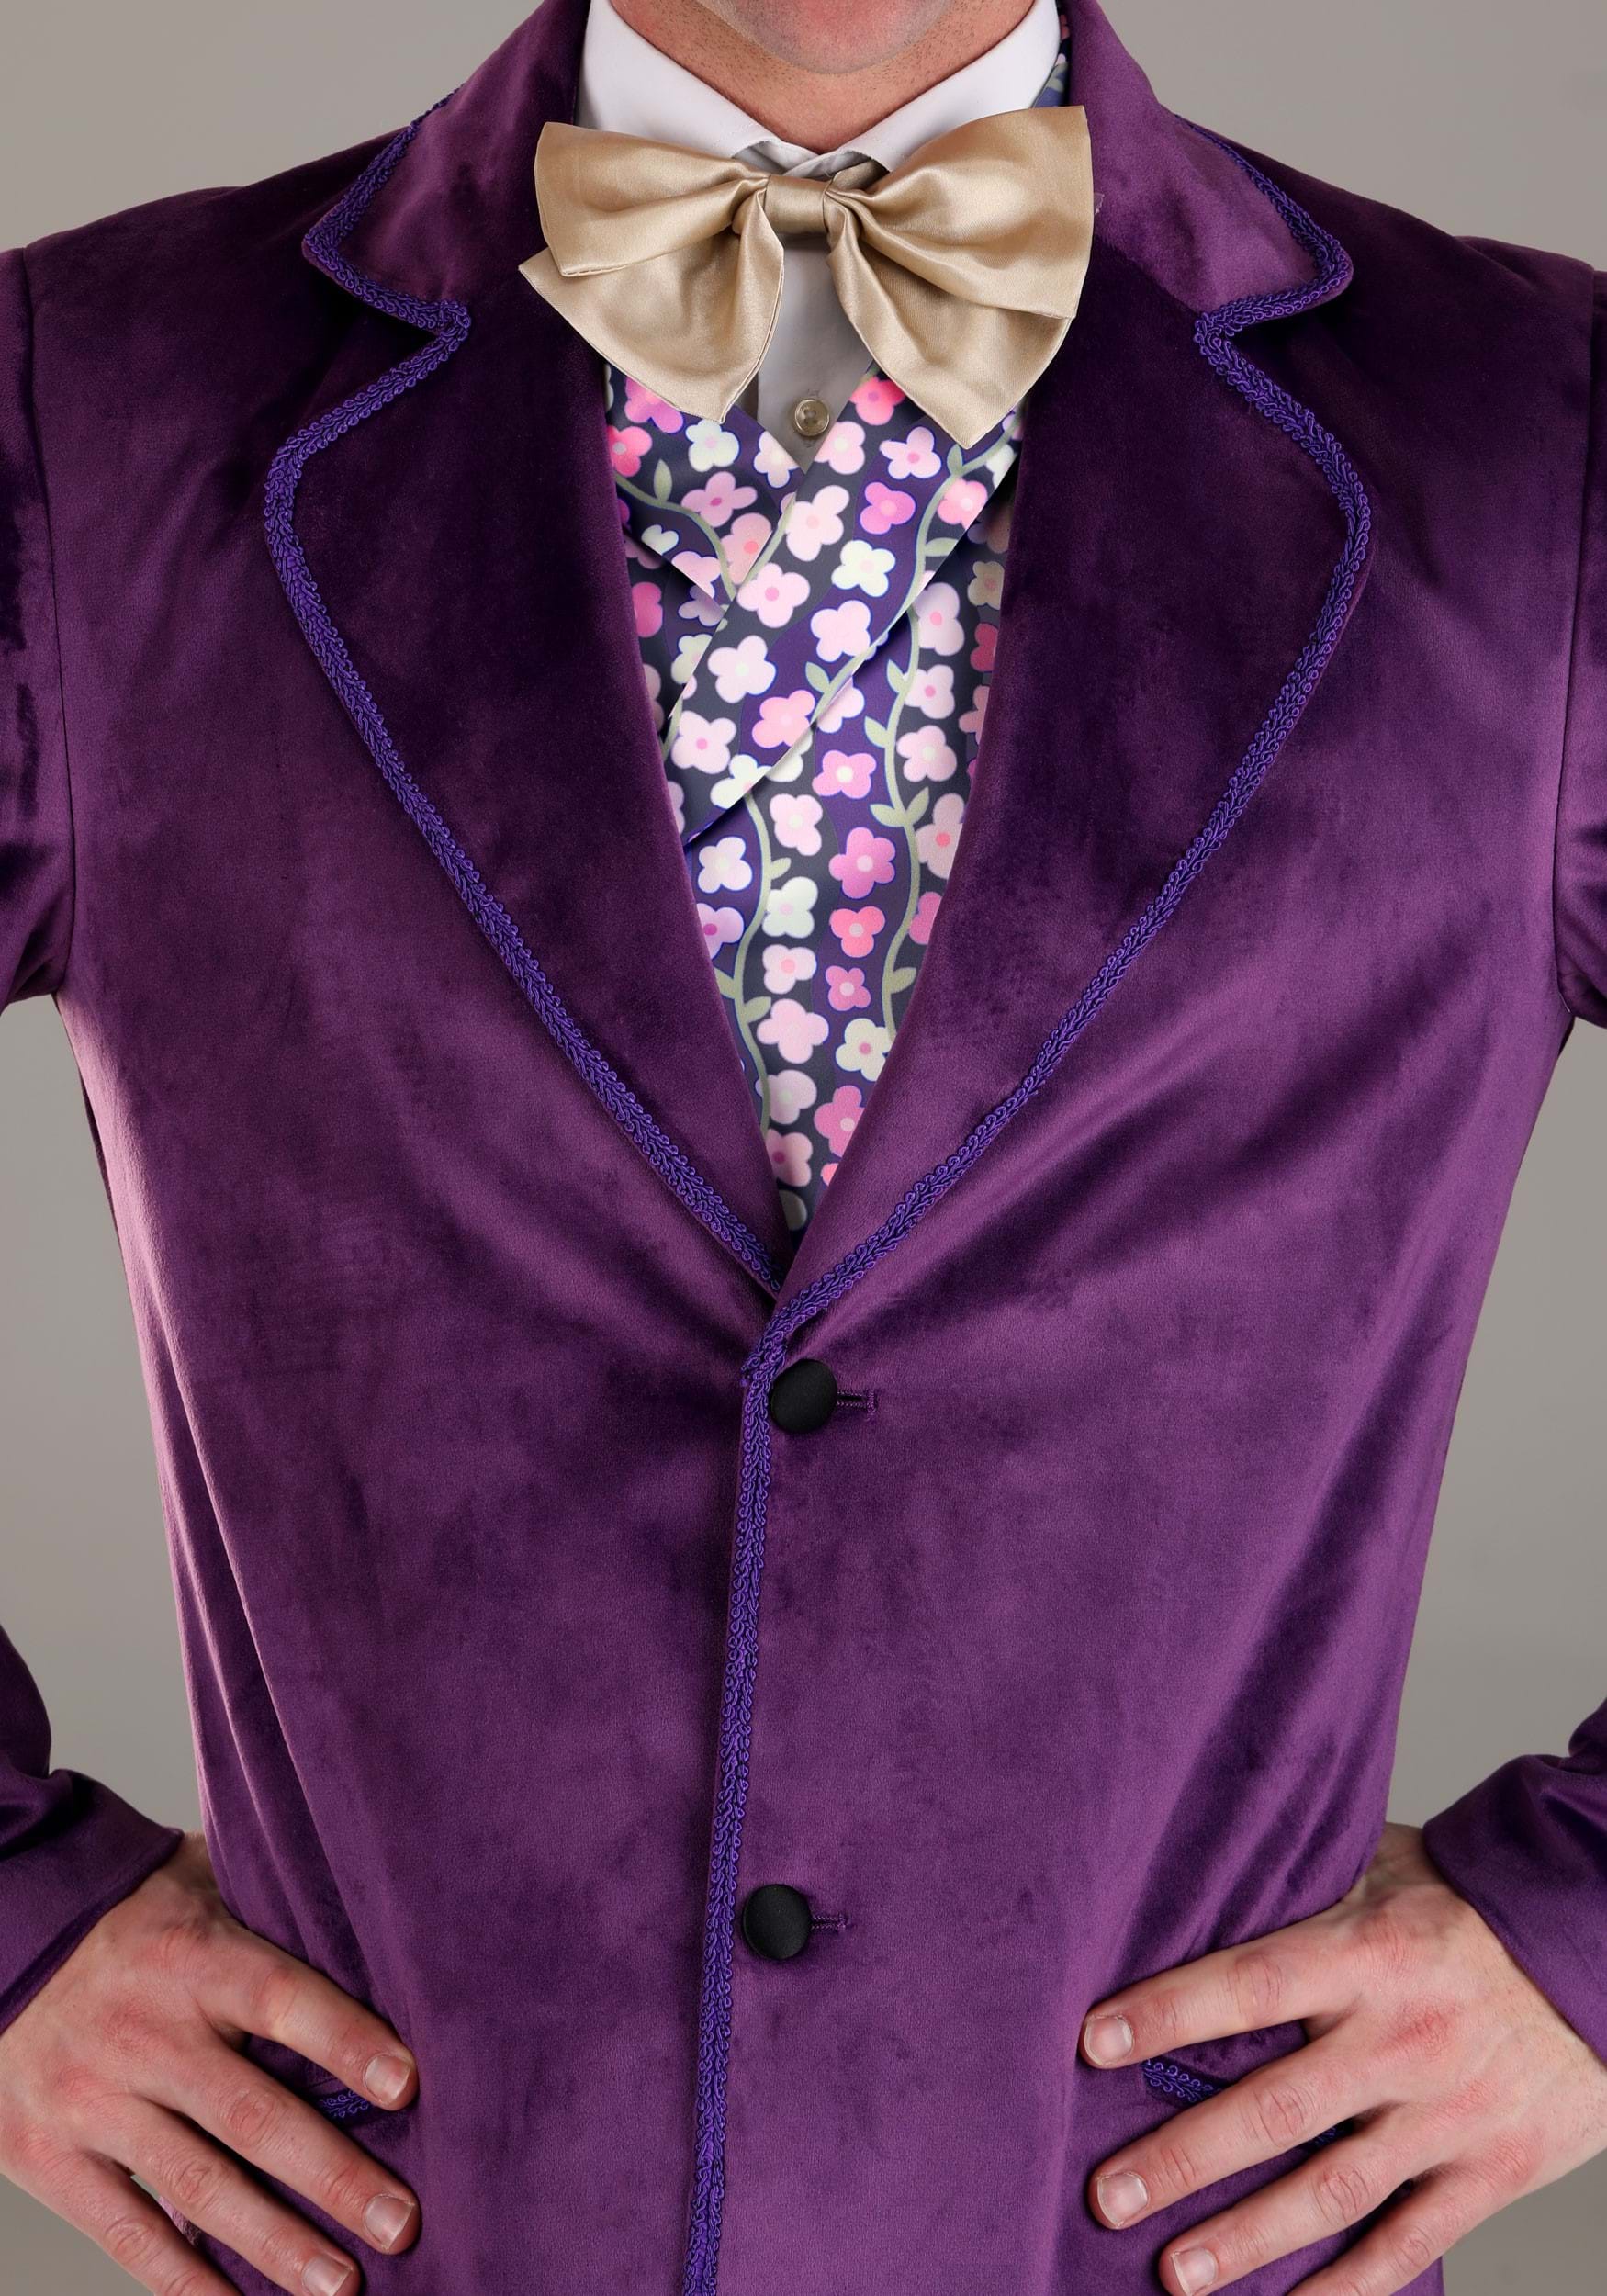 Authentic Willy Wonka Men's Fancy Dress Costume Jacket , Adult Fancy Dress Costumes